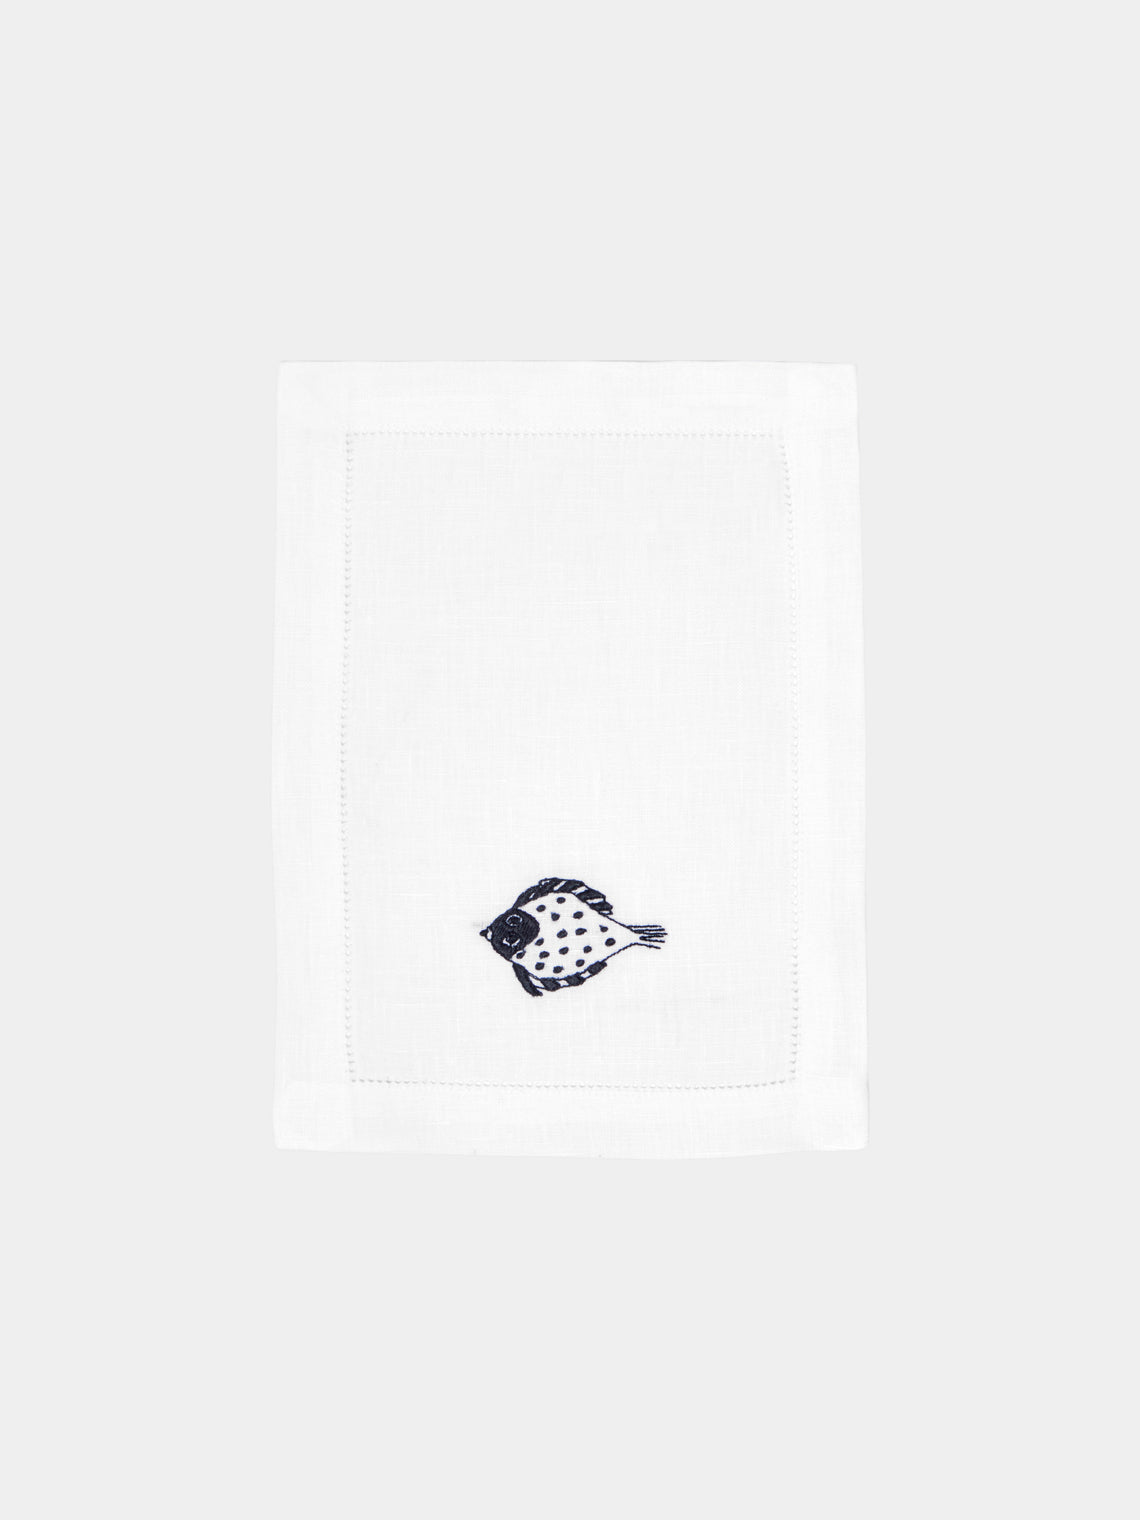 Loretta Caponi - Mendini Fish Hand-Embroidered Linen Cocktail Napkins (Set of 6) - White - ABASK - 